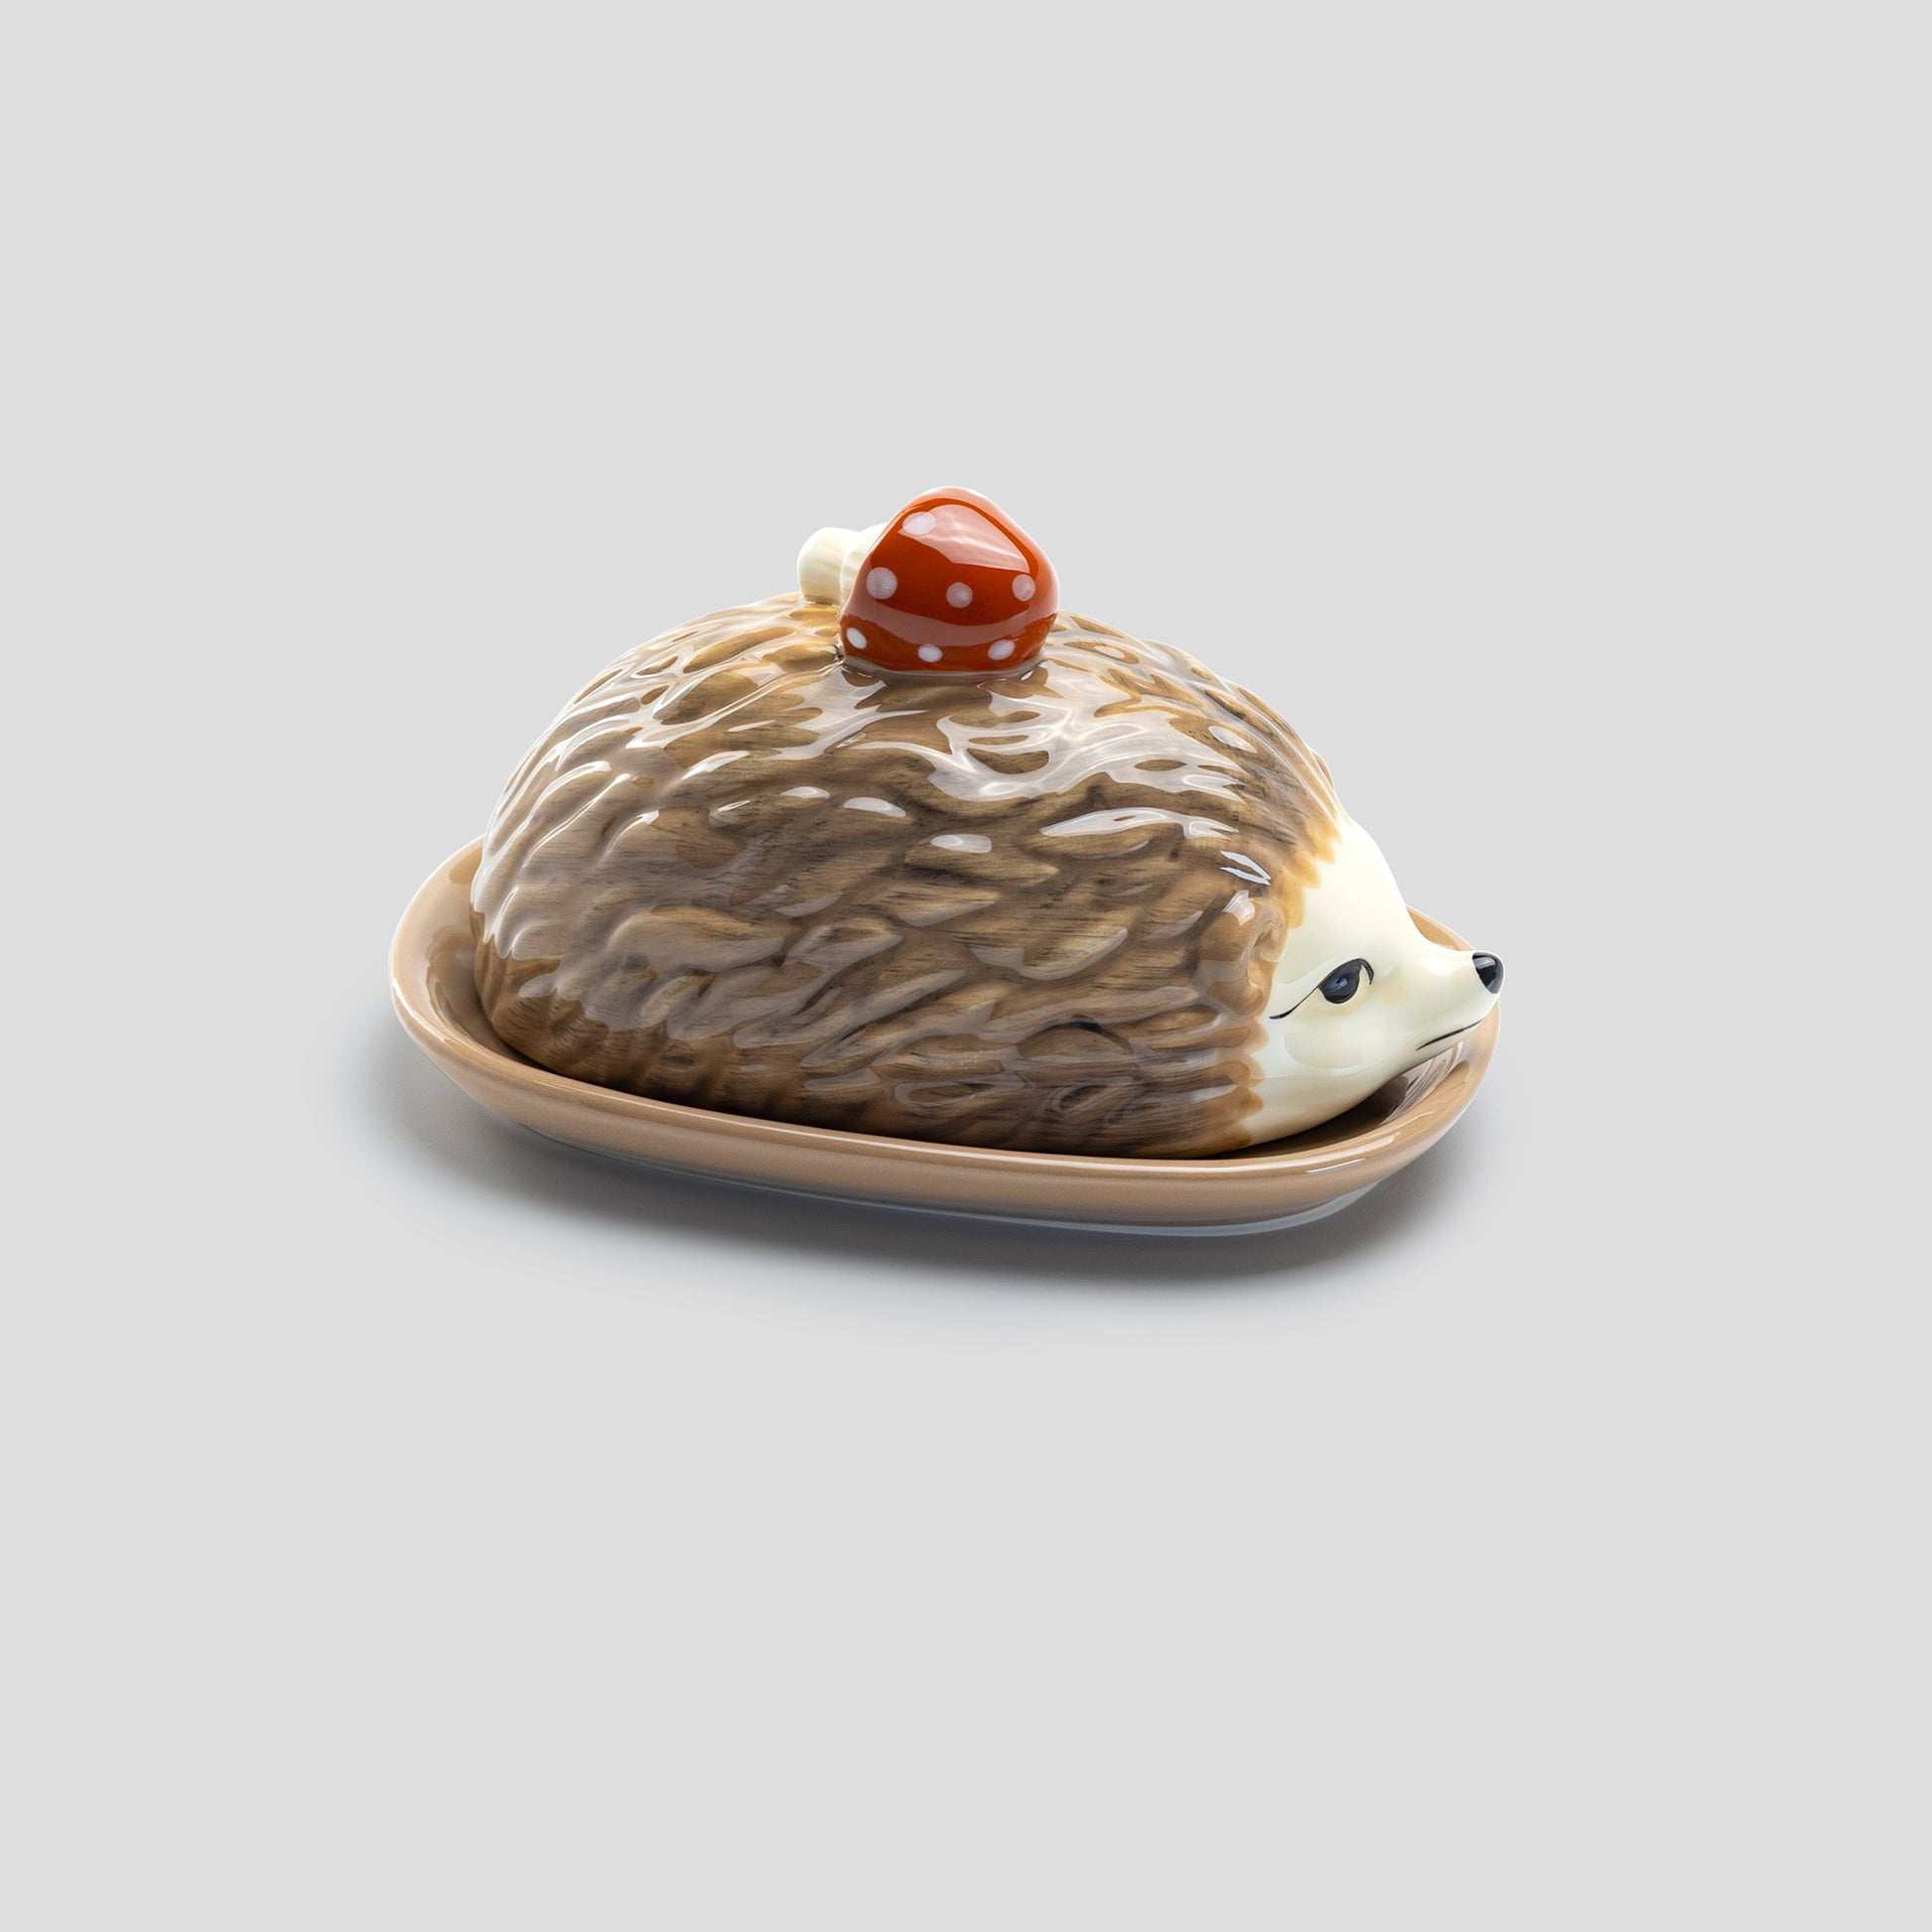 Potter's Studio Fall Hedgehog Mushroom Butter Dish